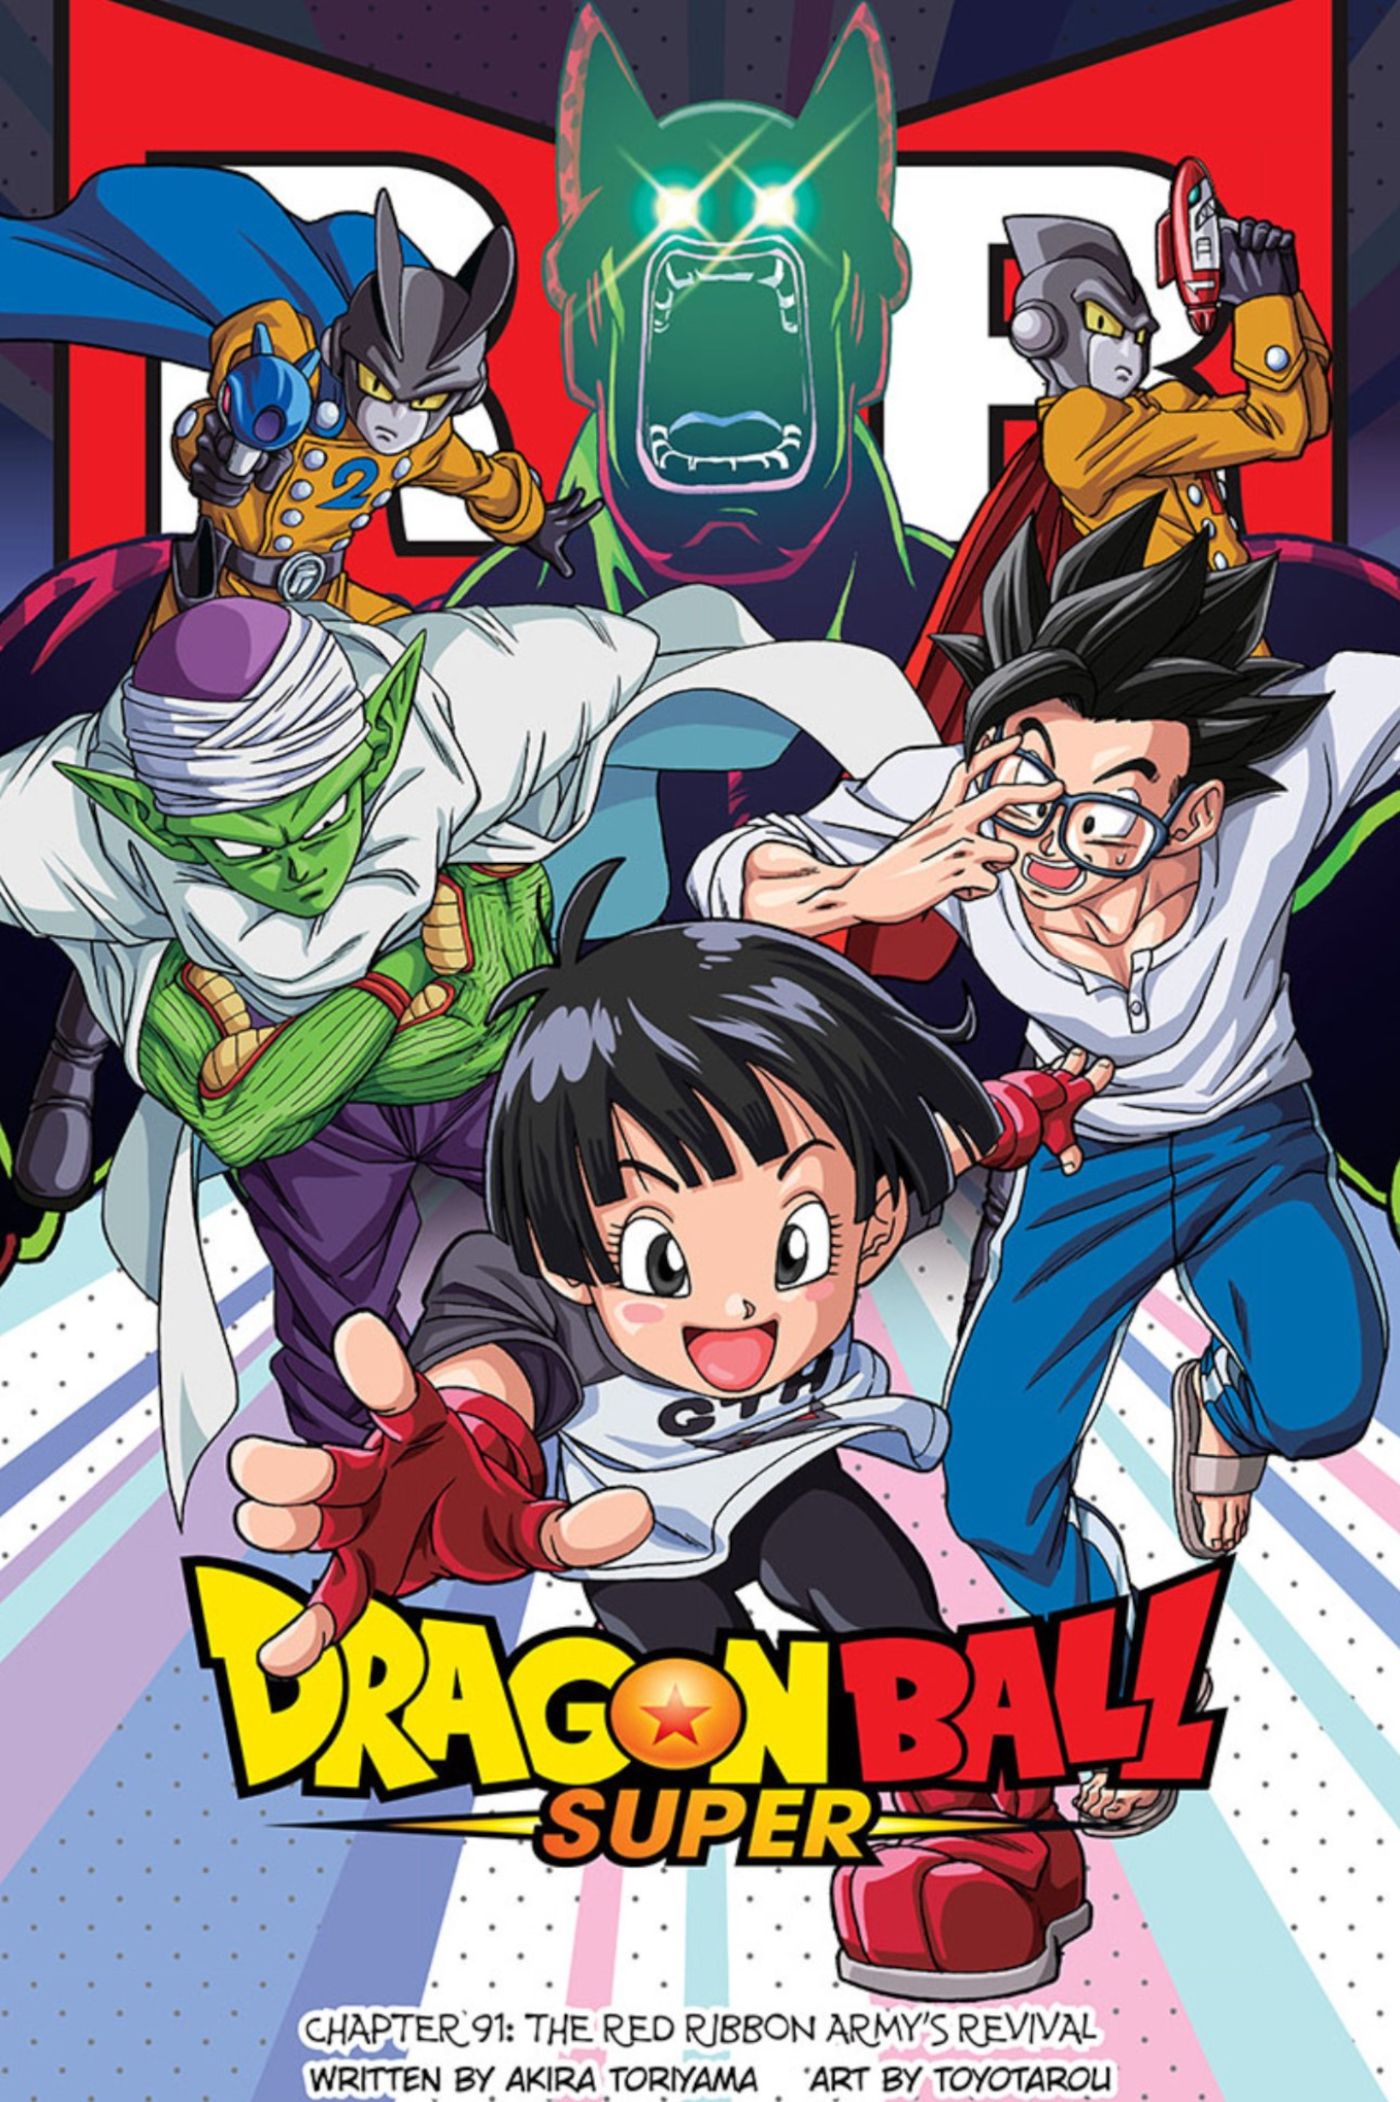 “Not The Senzu Bean The Film Was” – Dragon Ball Super’s Super Hero Manga Review